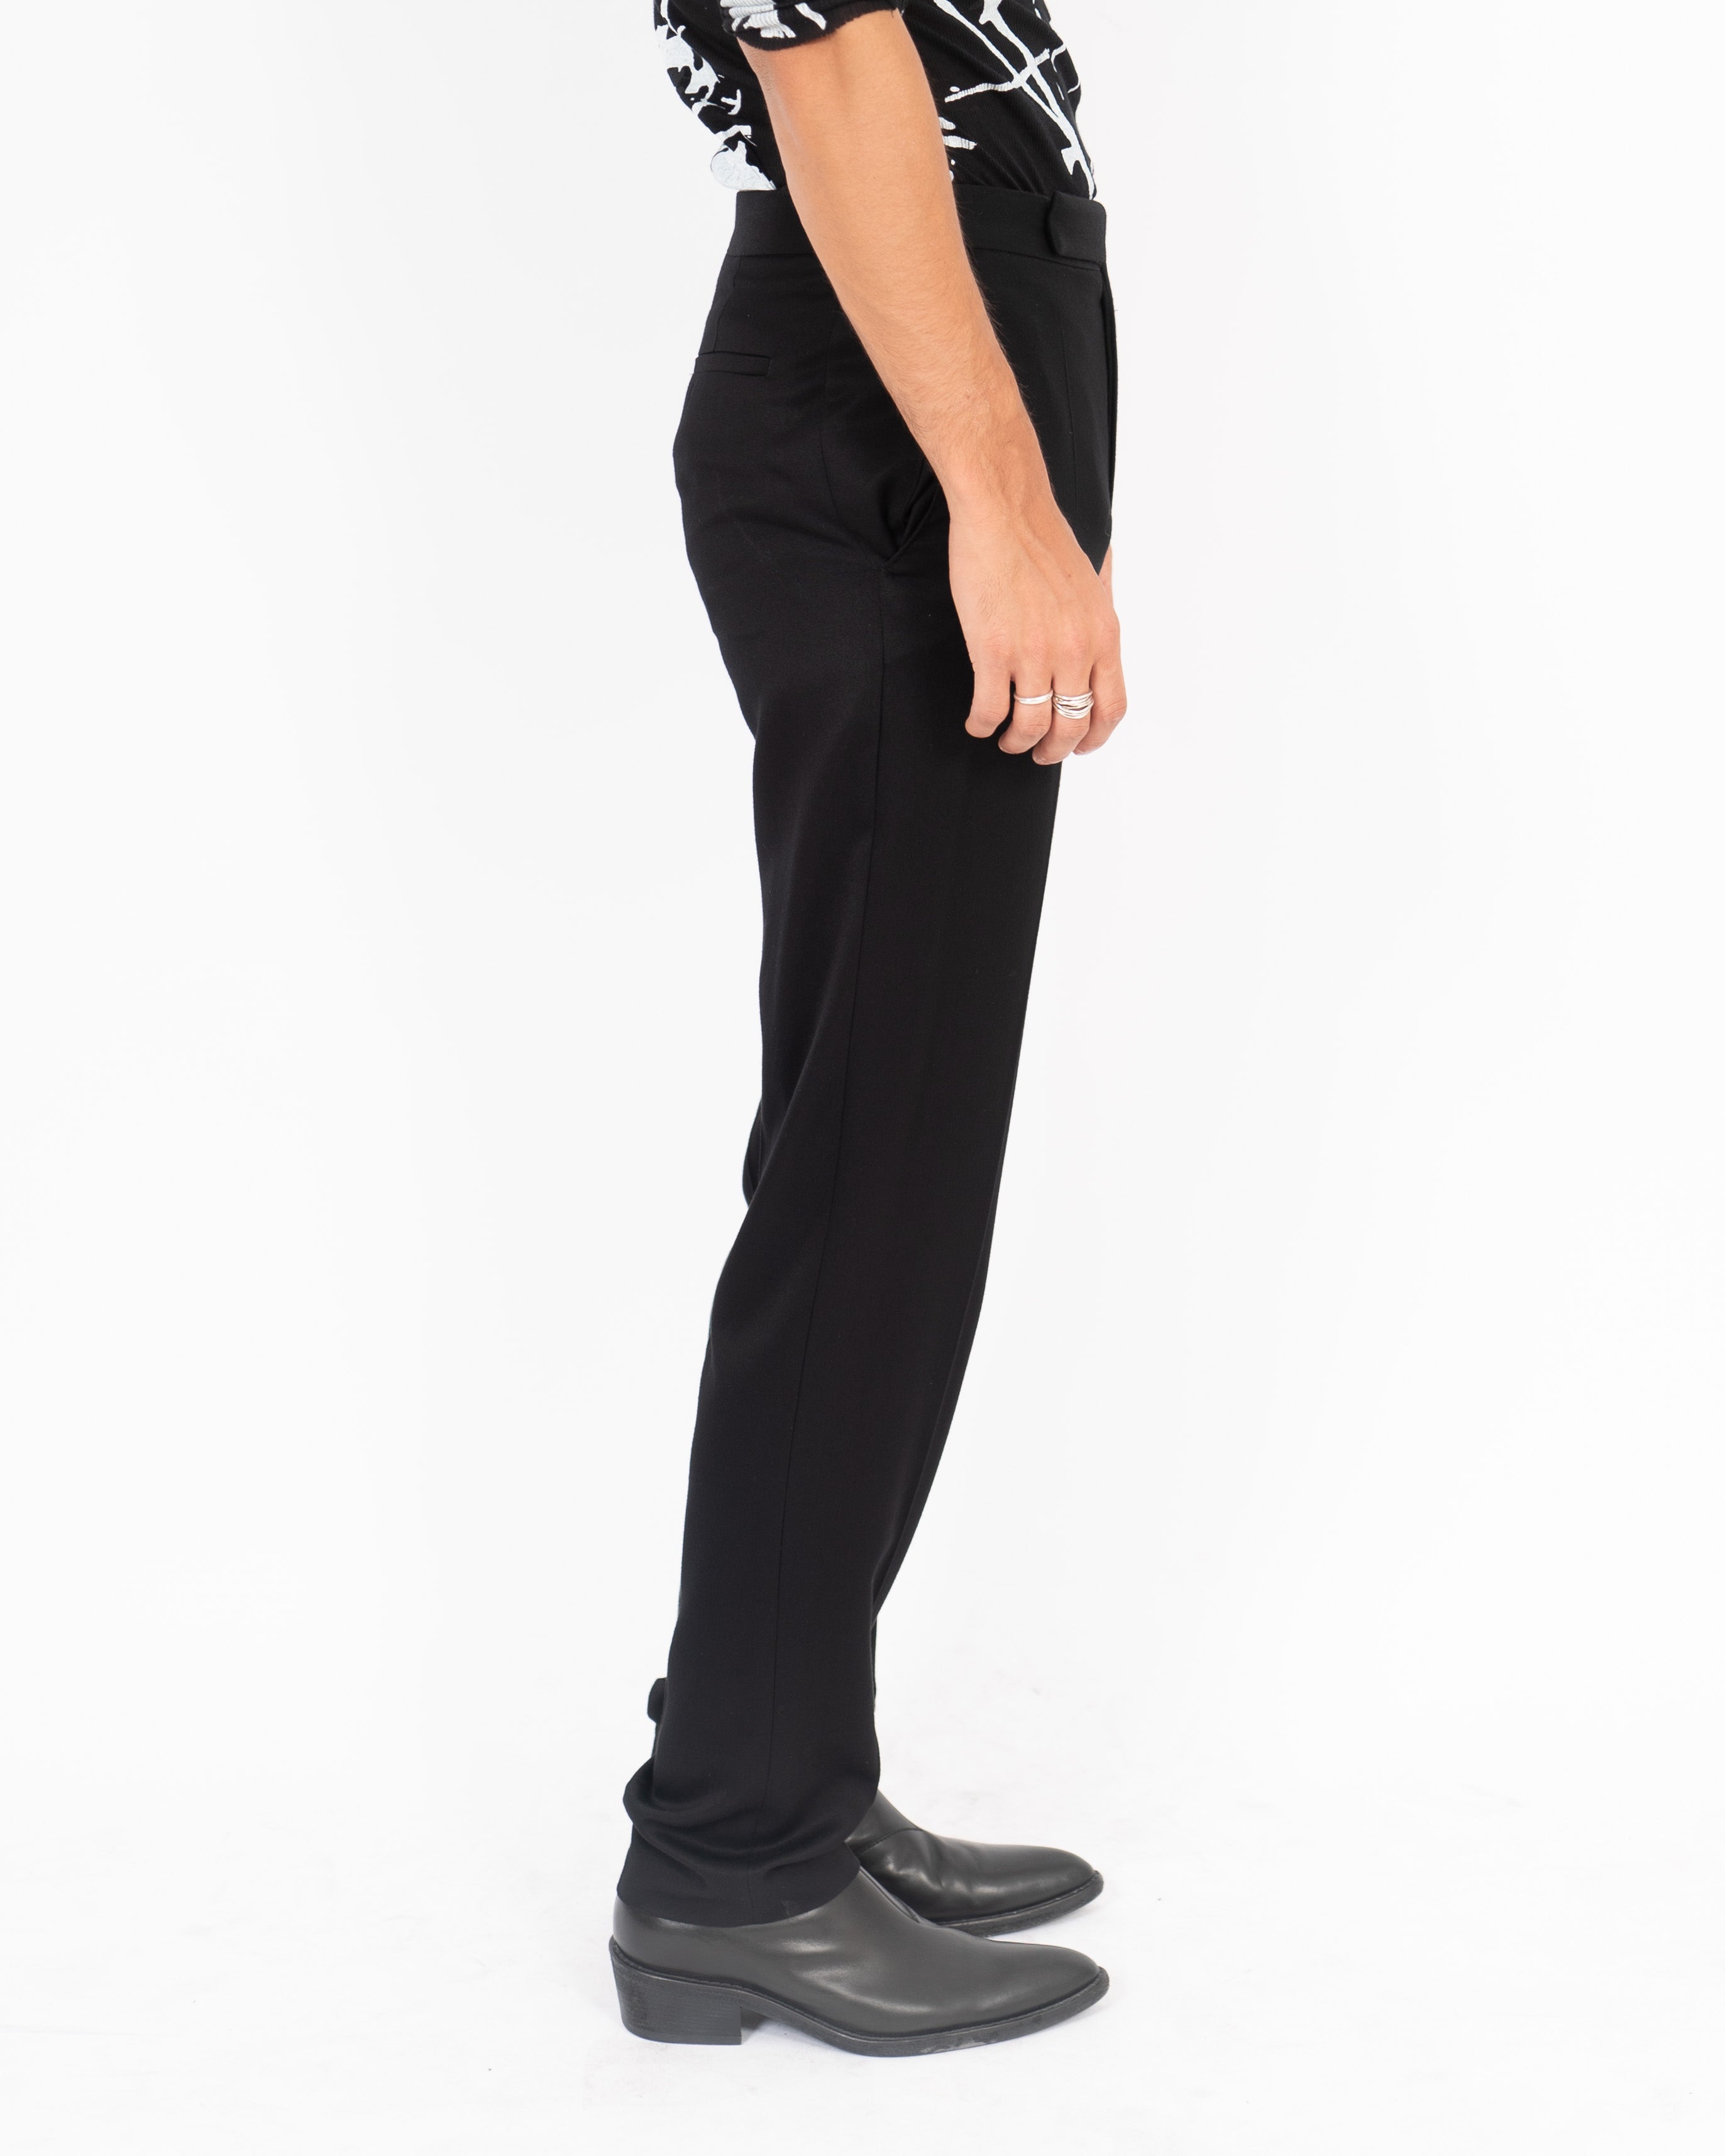 SS20 Narrow Waistband Trousers Bondi Black Sample